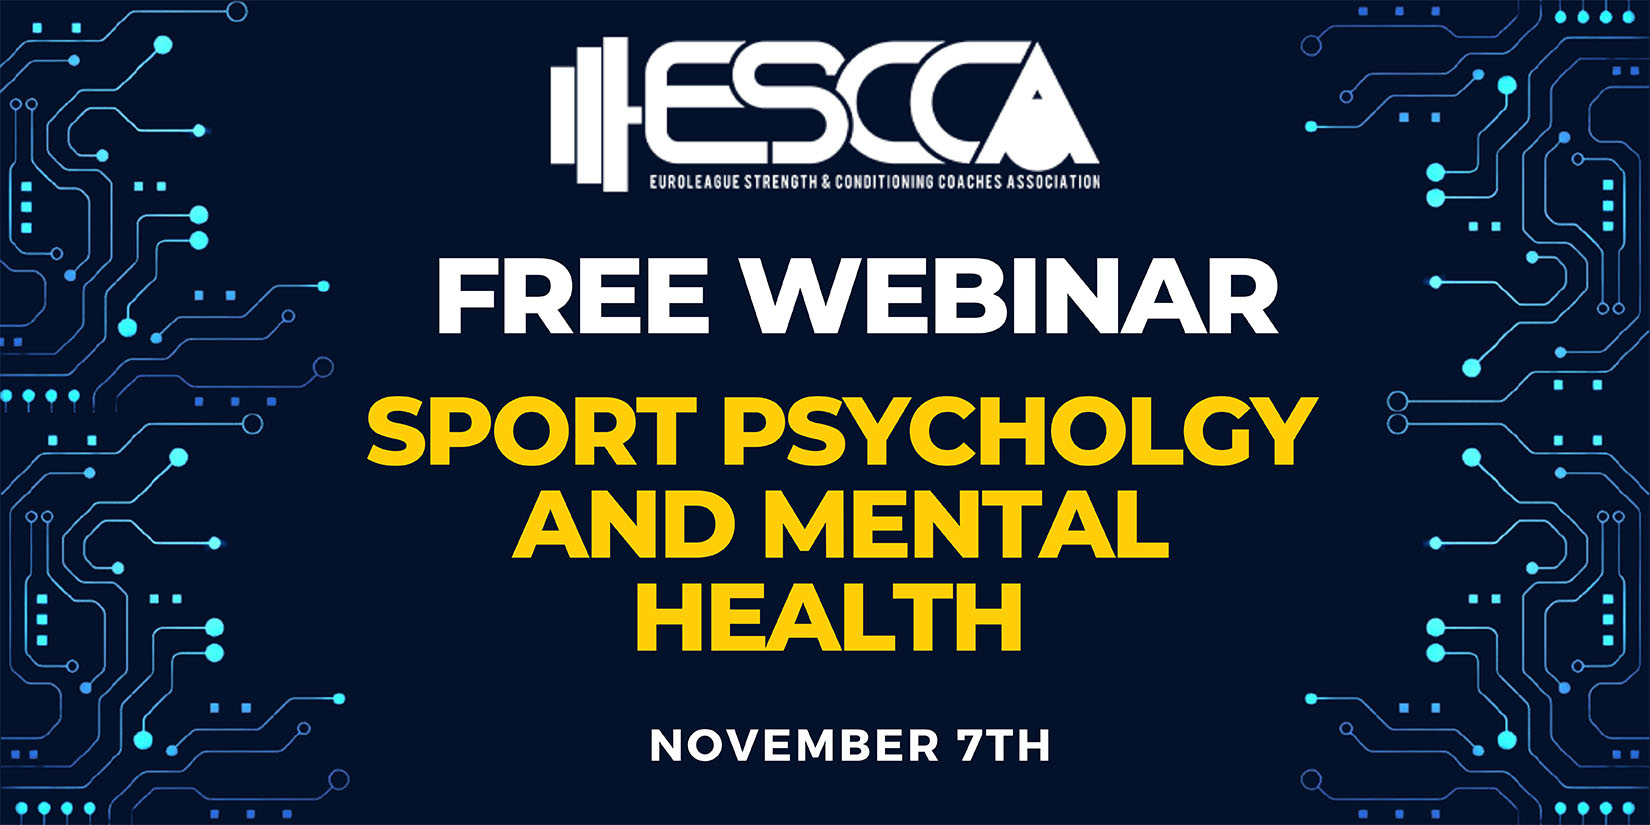 Sports Psychology and Mental Health webinar - ESCCA